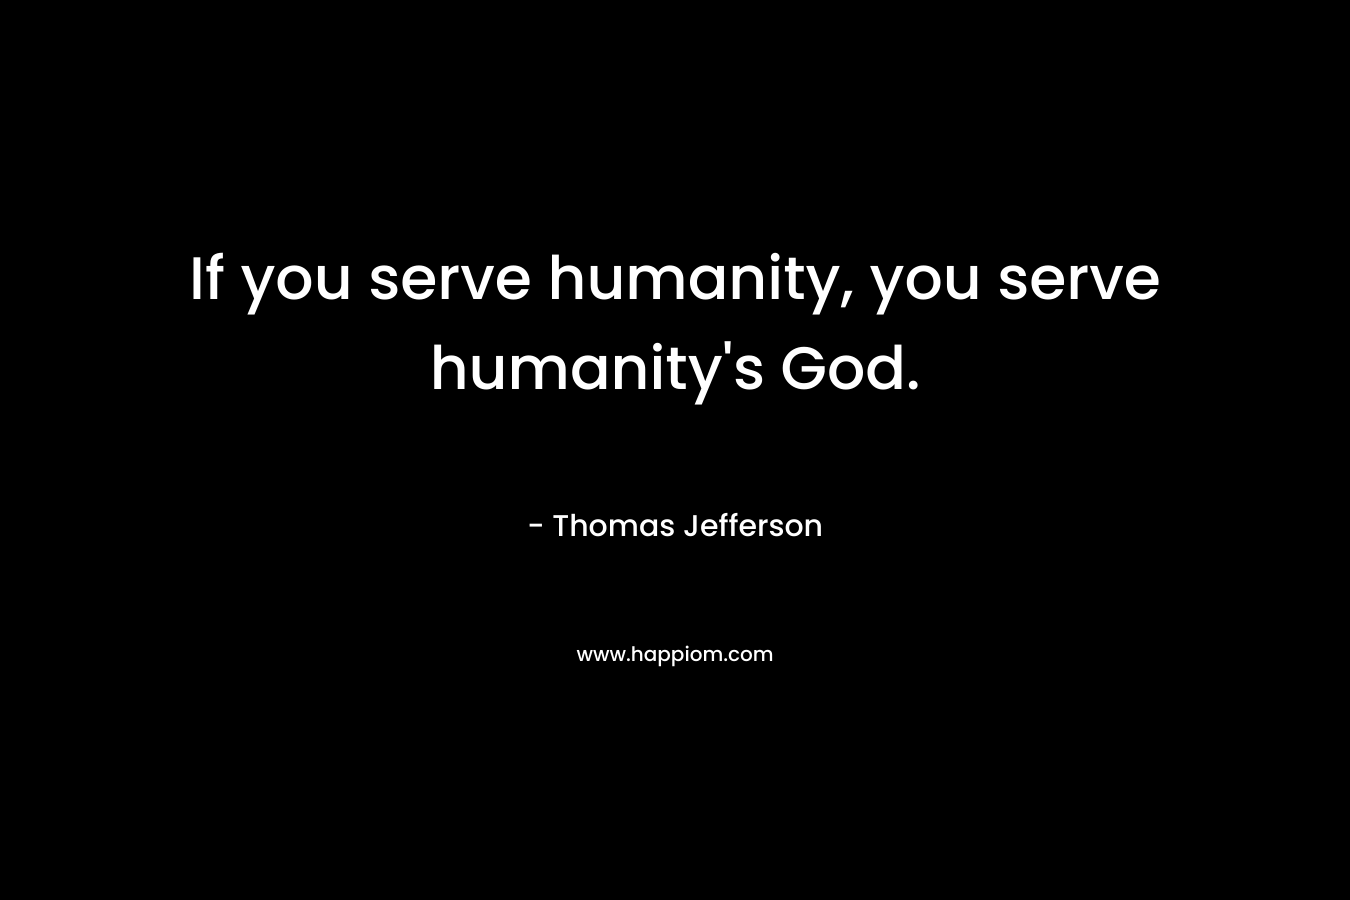 If you serve humanity, you serve humanity's God.